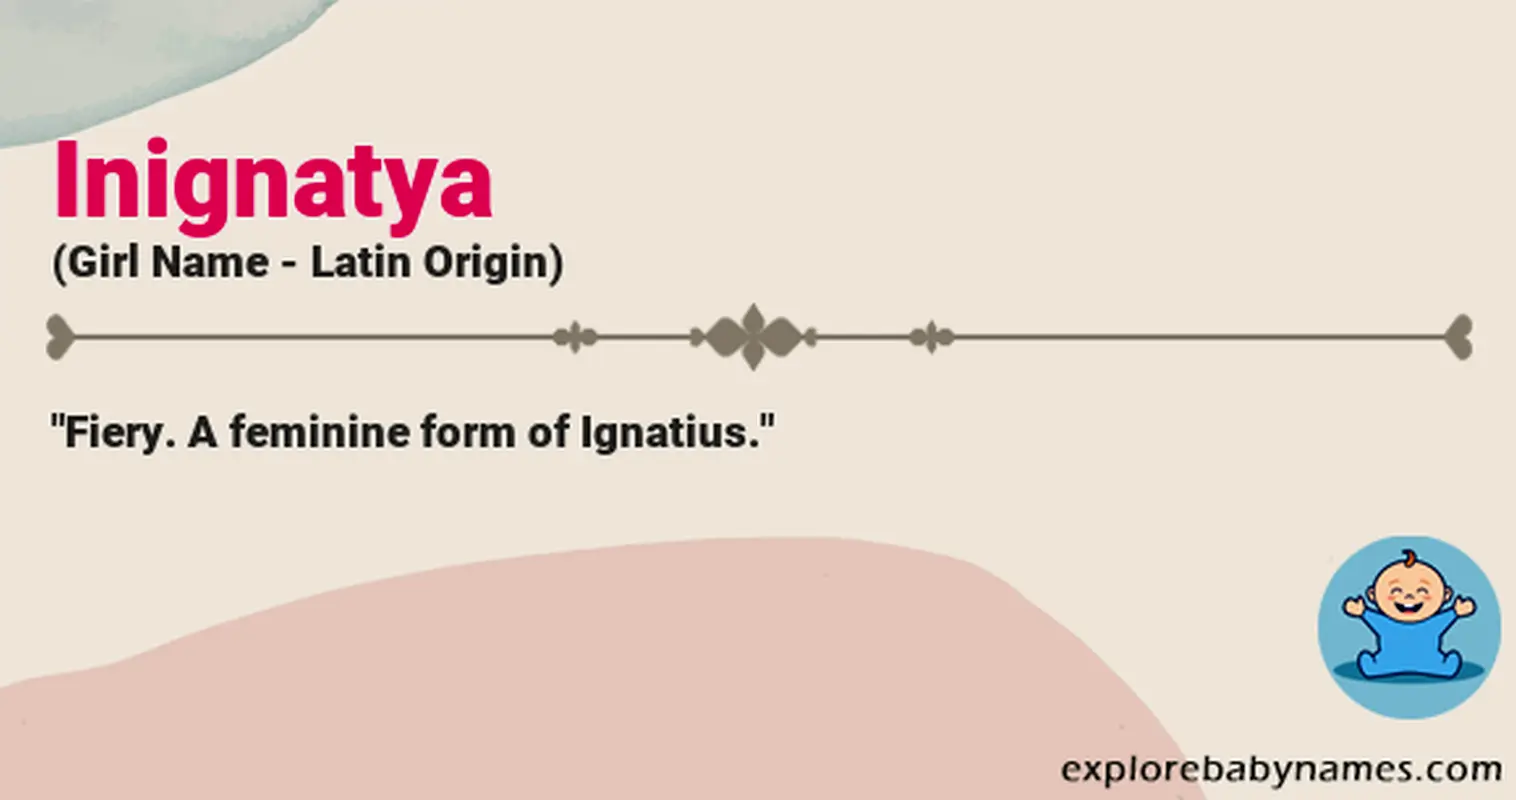 Meaning of Inignatya